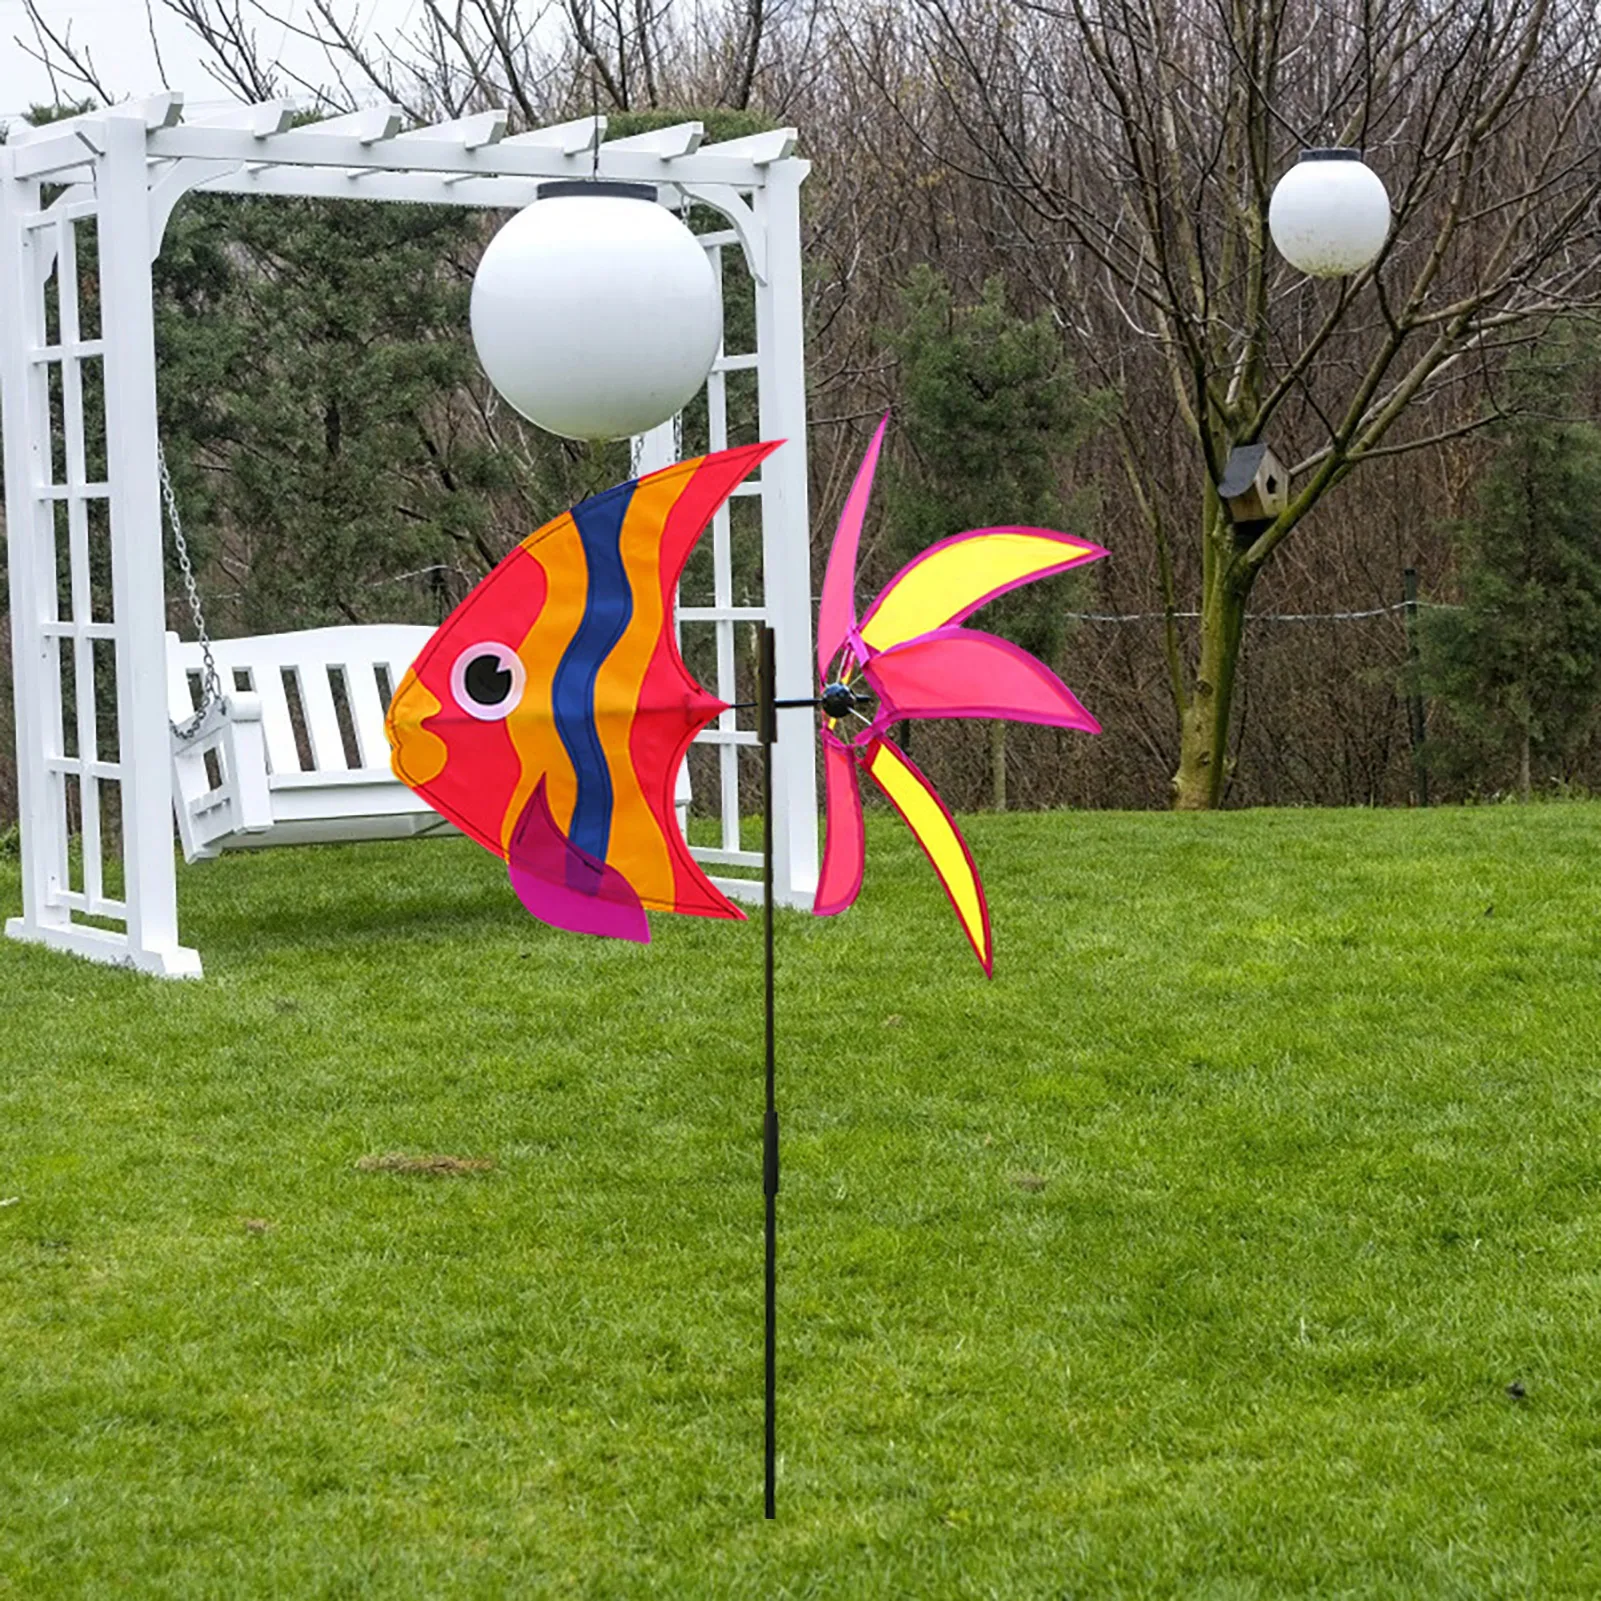 Xiayizhan Garden Pinwheels Wind Spinner Animal Windmill Spinning Pole for Yard Art or Garden Decoration 